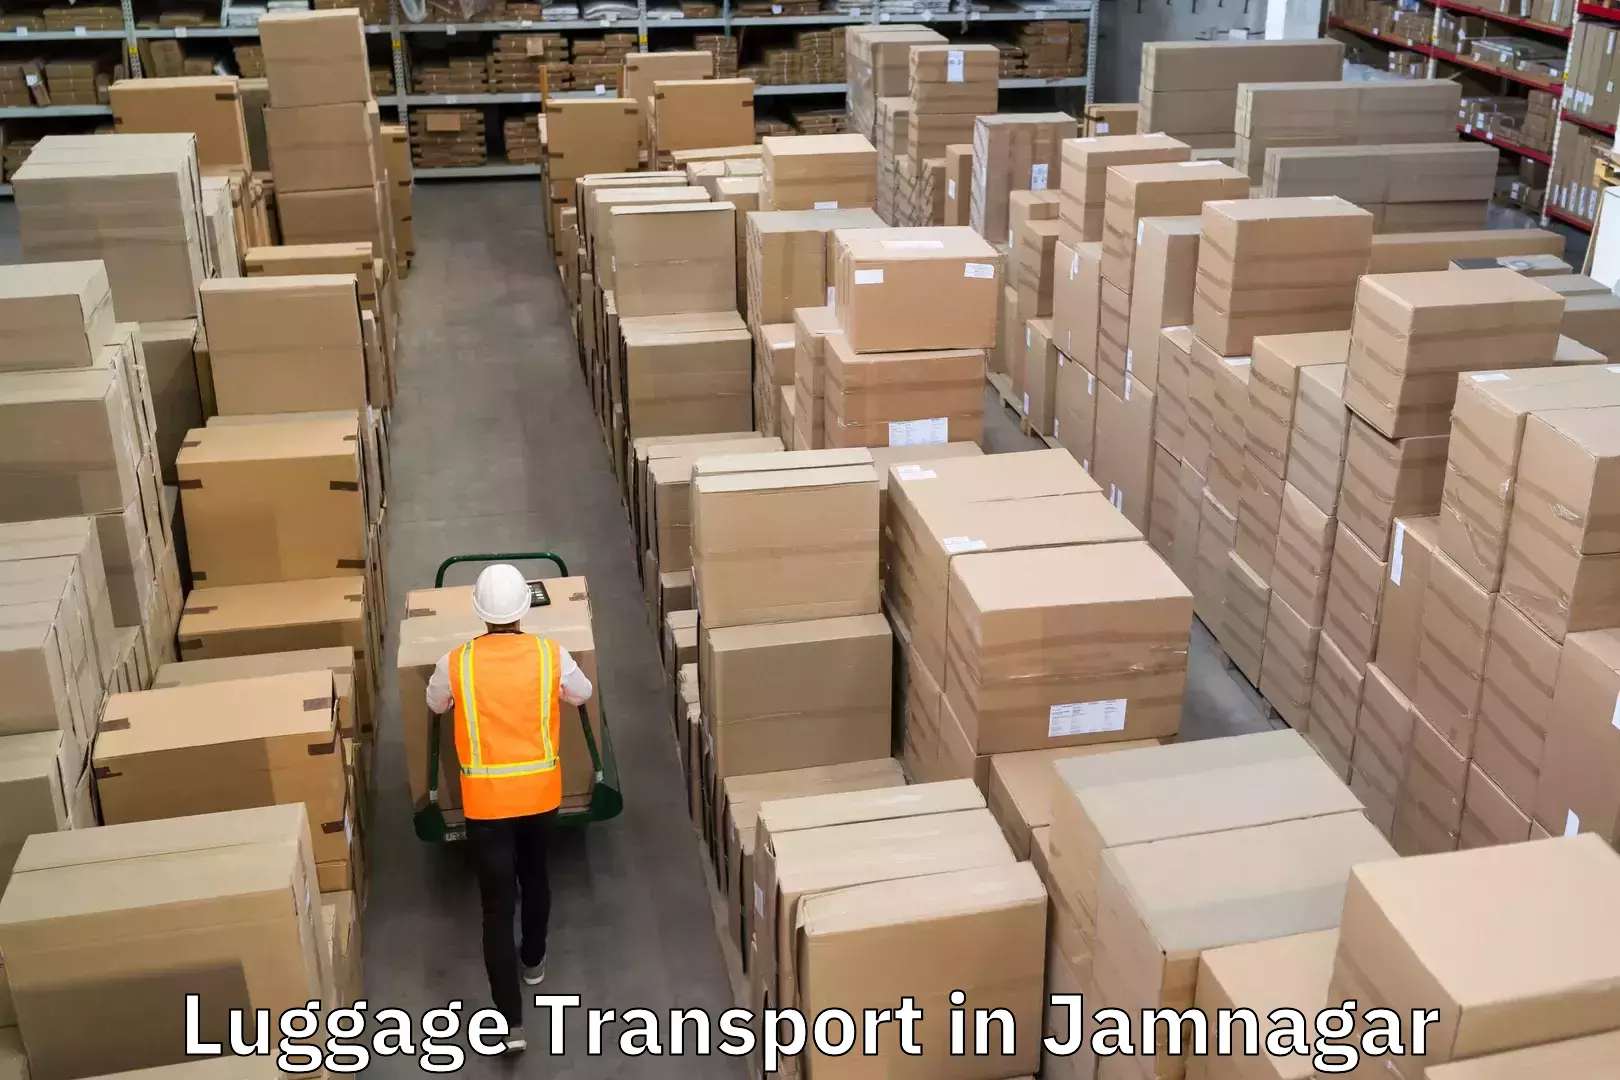 Luggage shipment specialists in Jamnagar